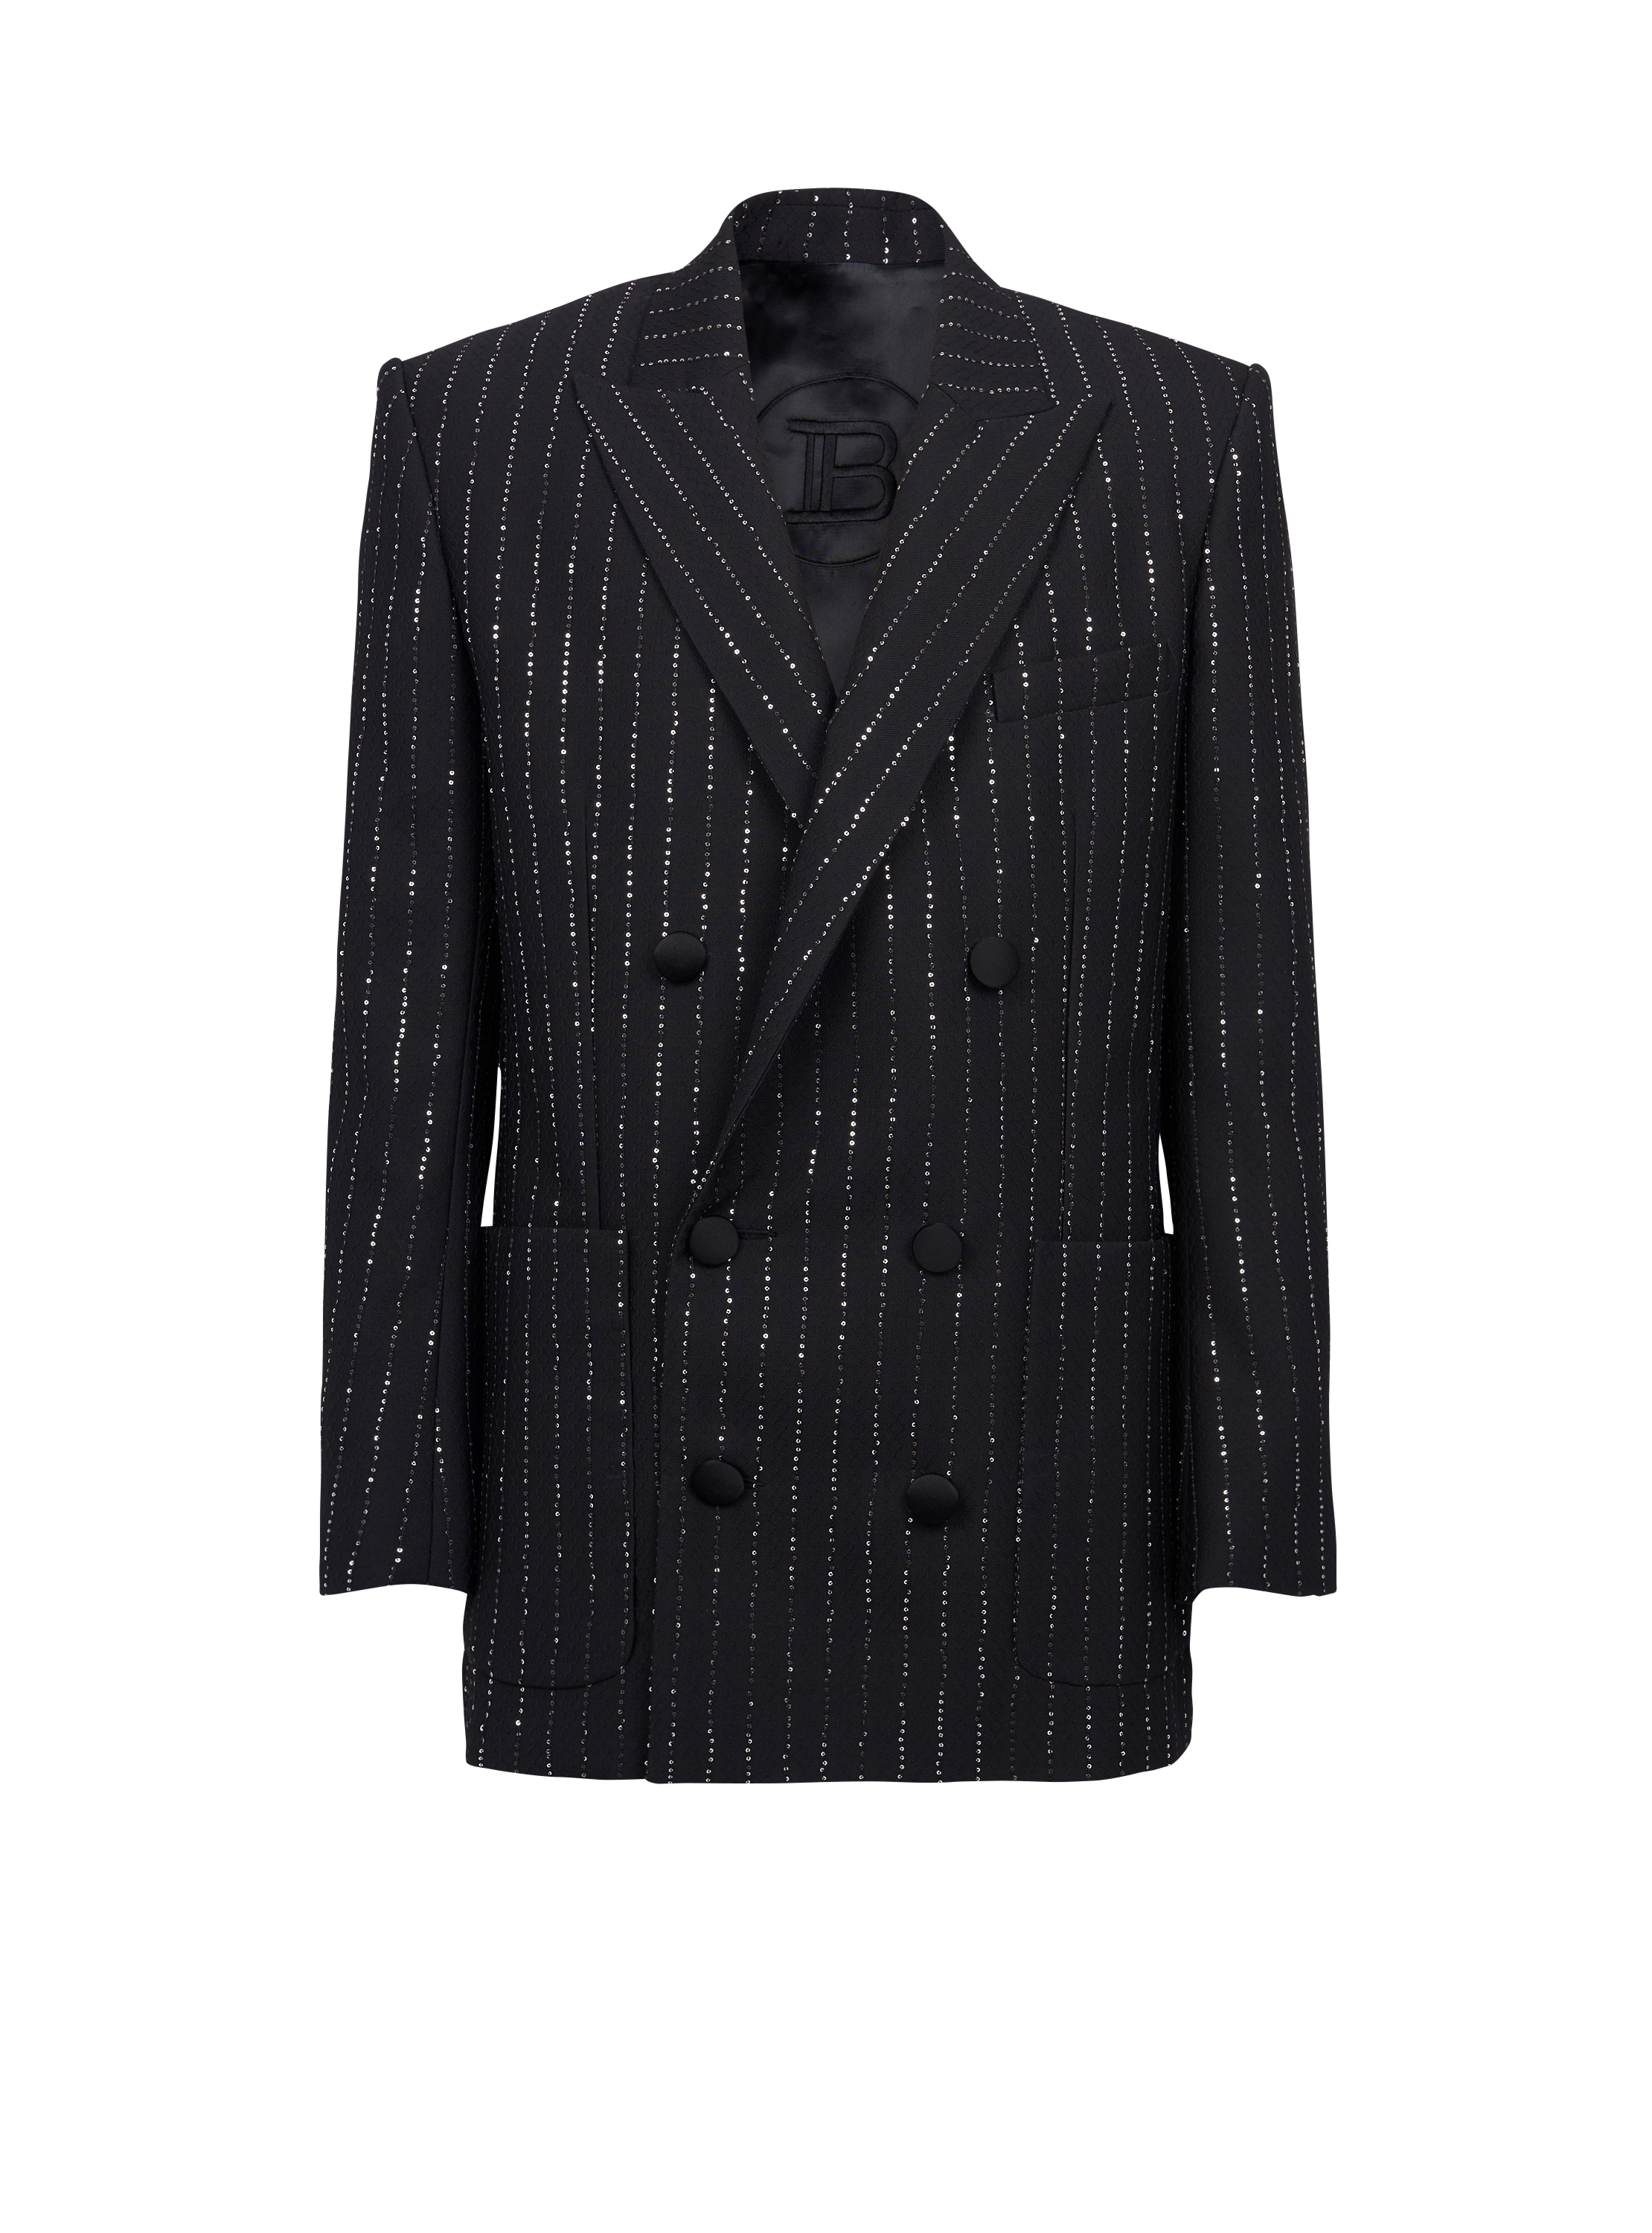 Blazer with sequin stripes, black, hi-res